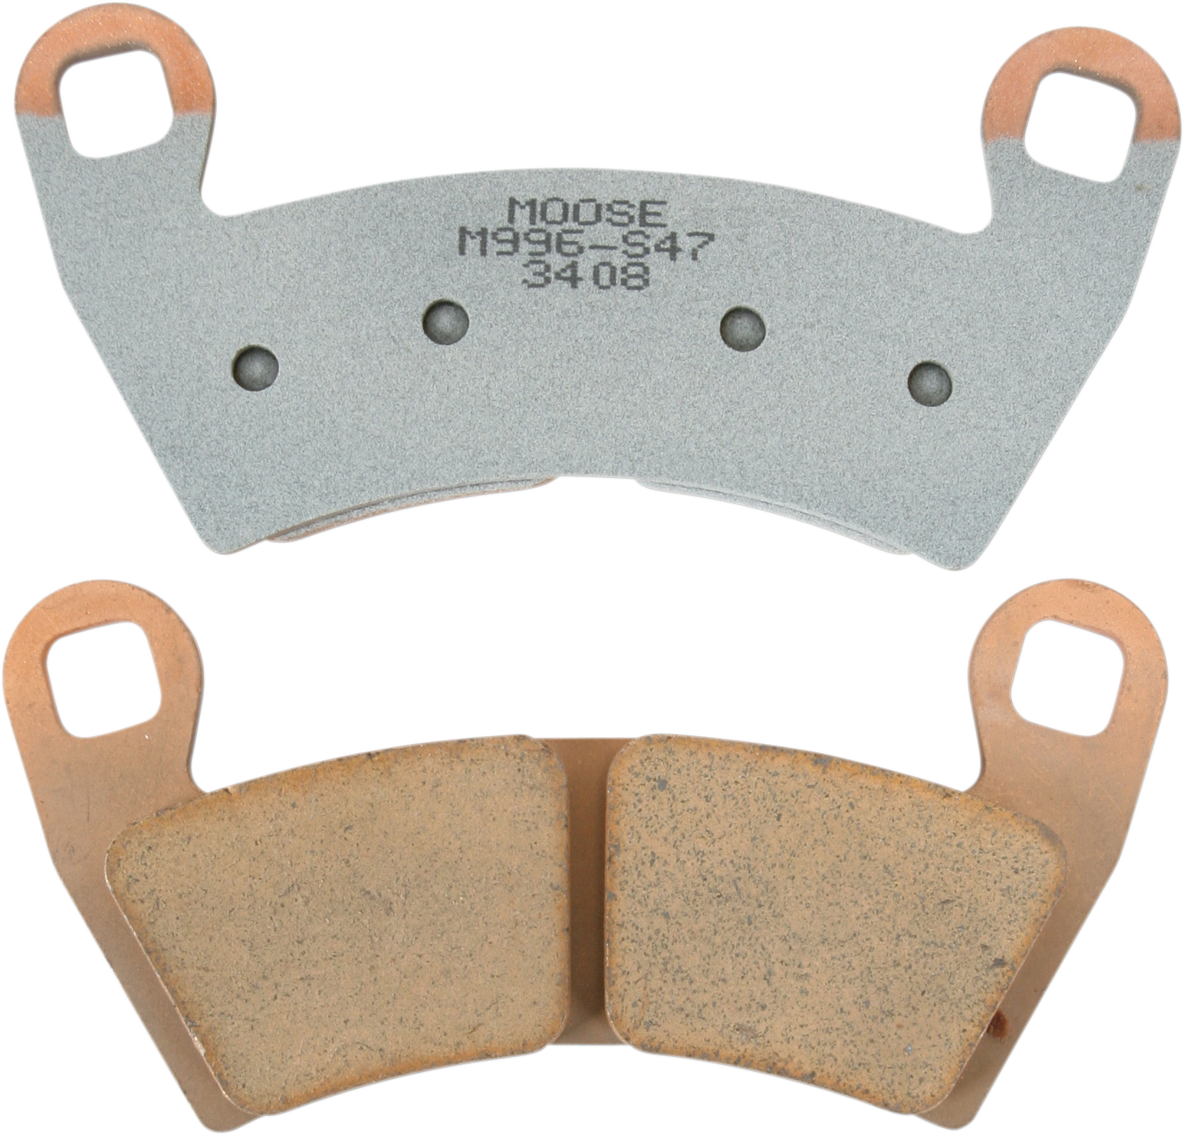 MOOSE UTILITY XCR Brake Pads - Front/Rear - Polaris M996-S47